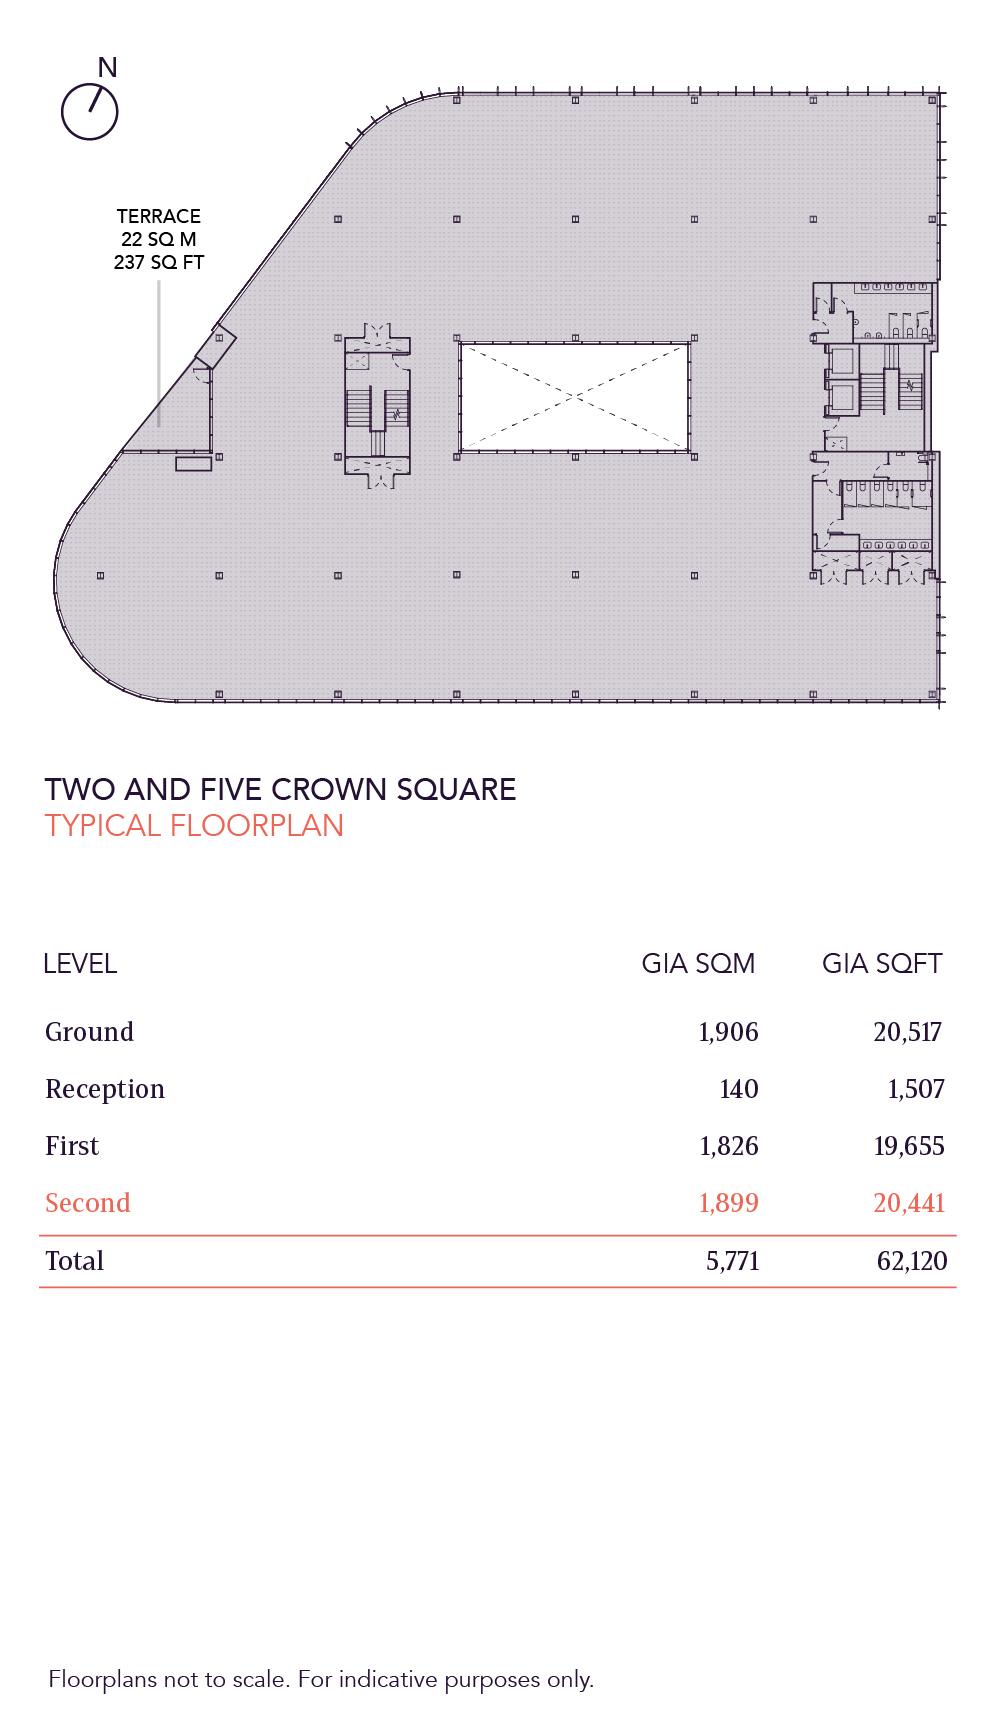 Typical Floorplan Image